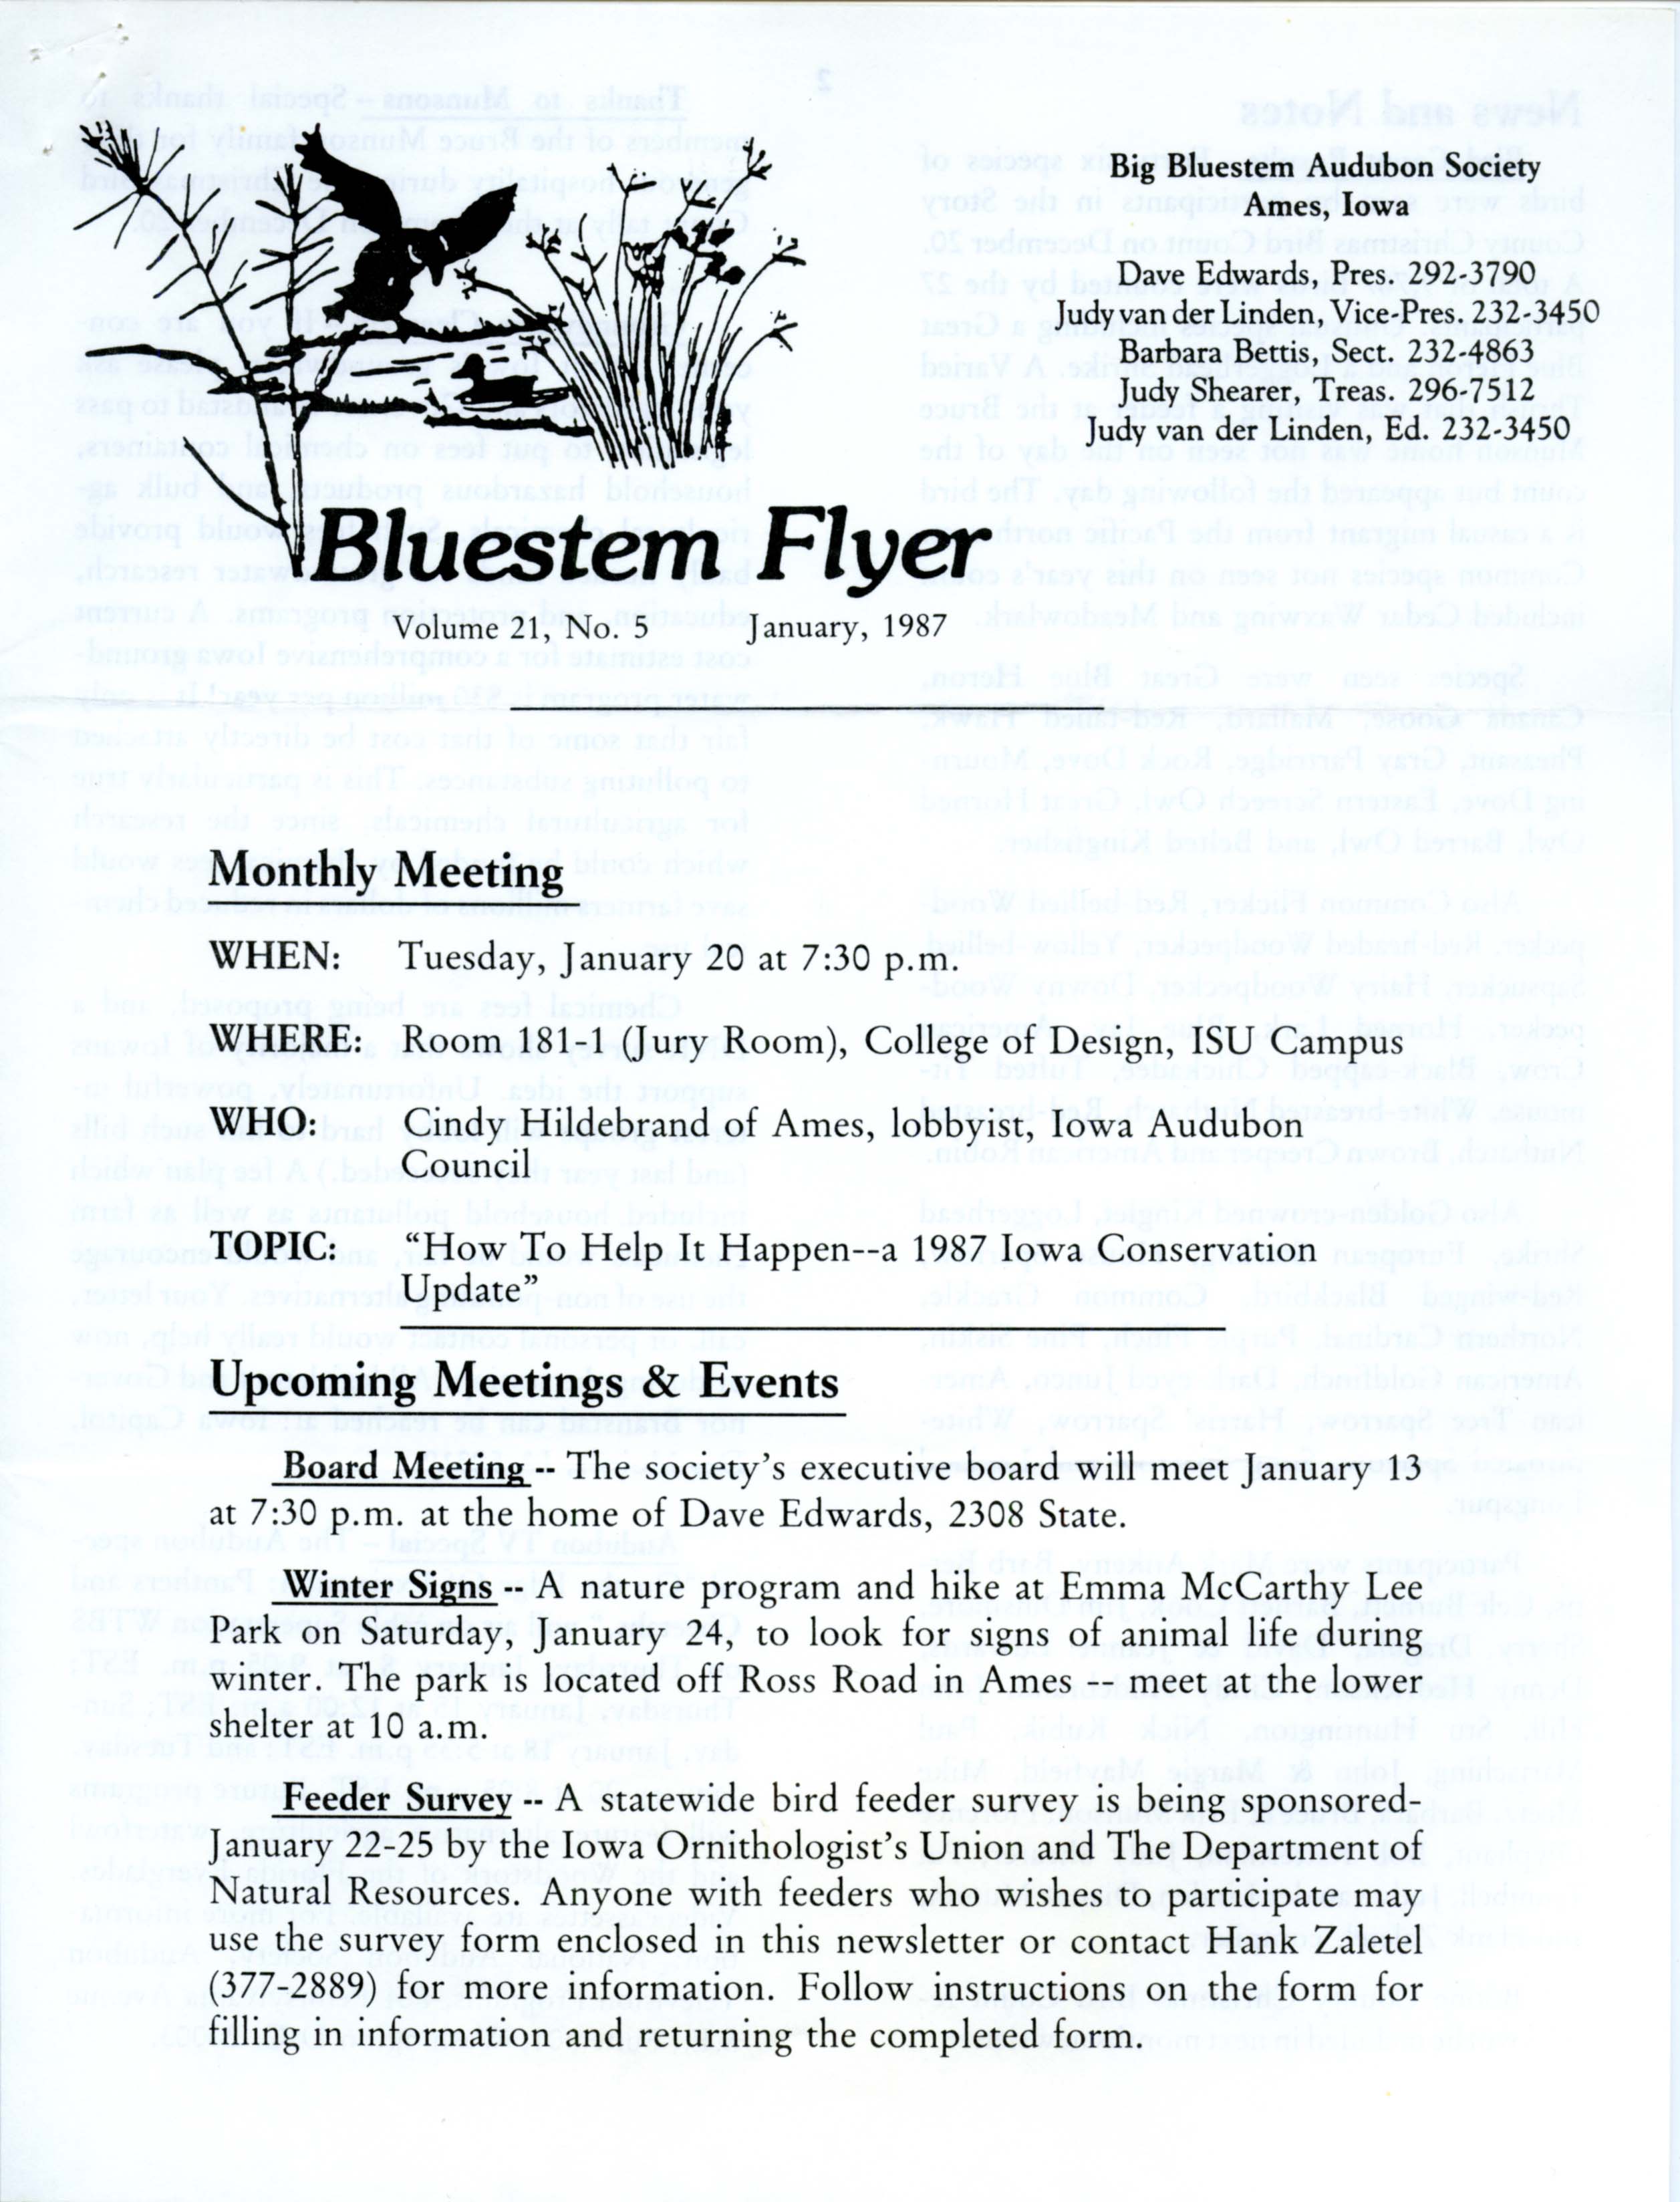 Bluestem Flyer, Volume 21, Number 5, January 1987 